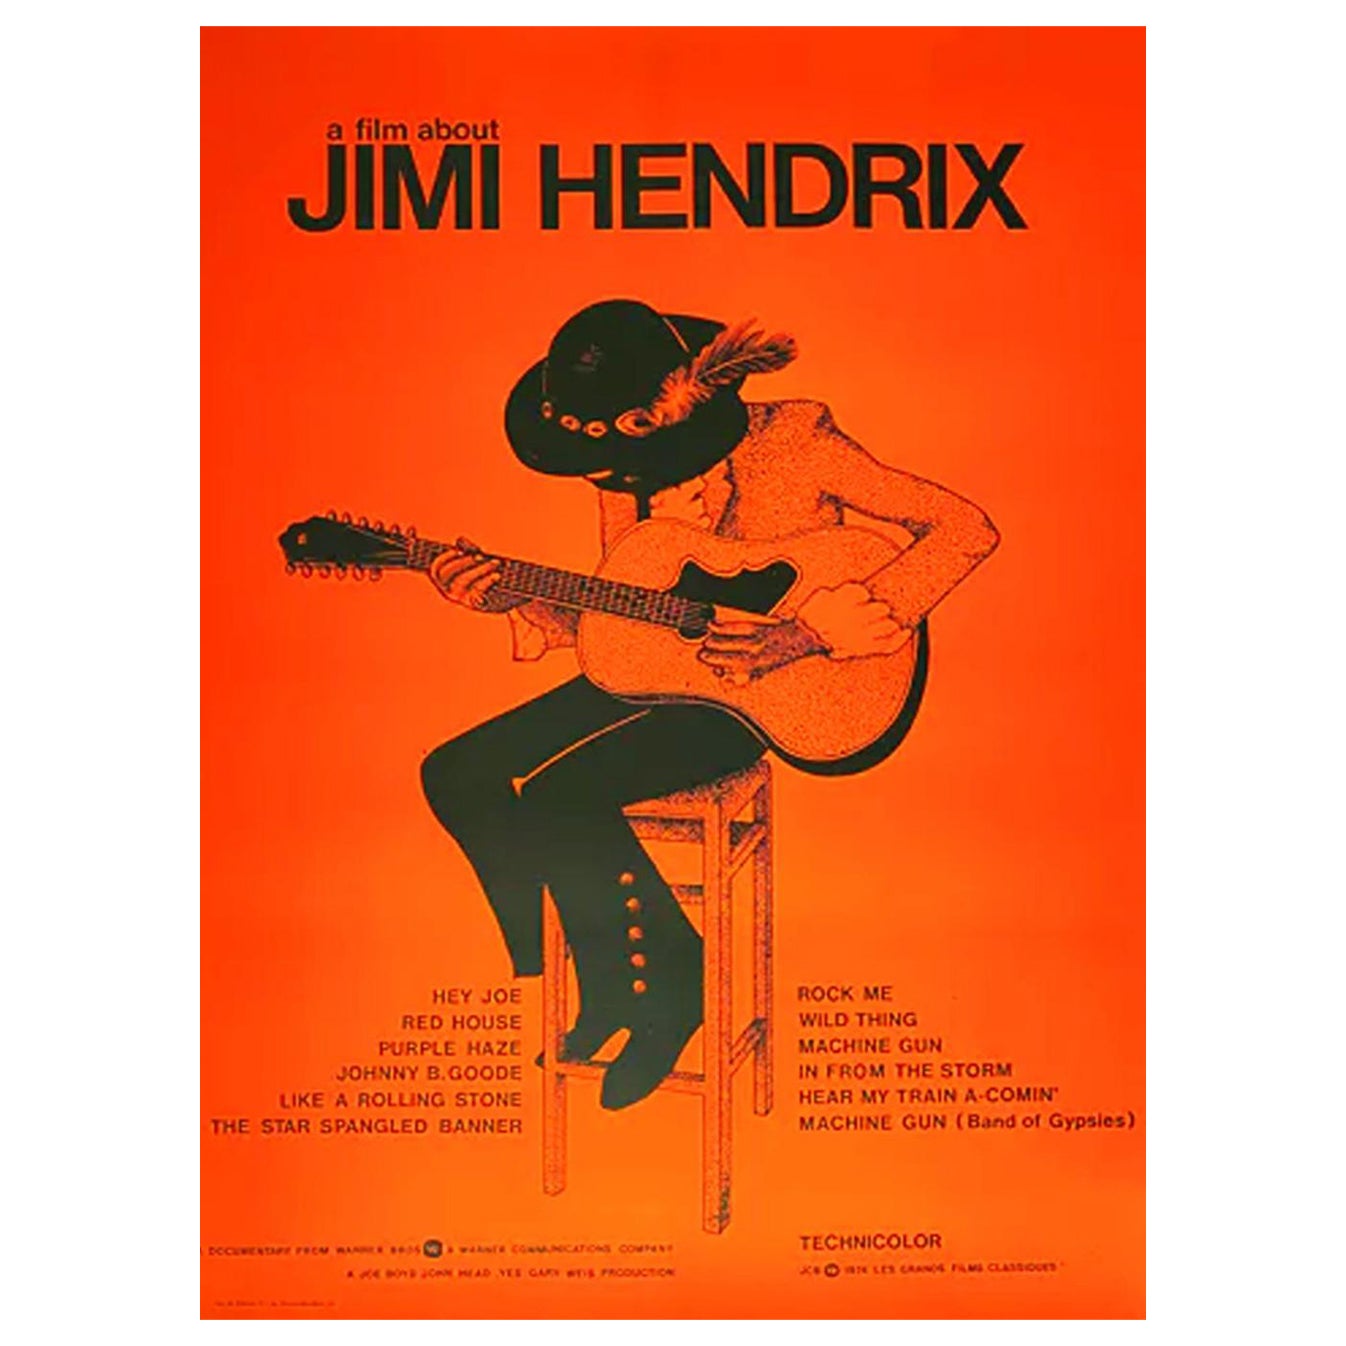 1973 Jimi Hendrix 'A Film About' Original Vintage Poster For Sale